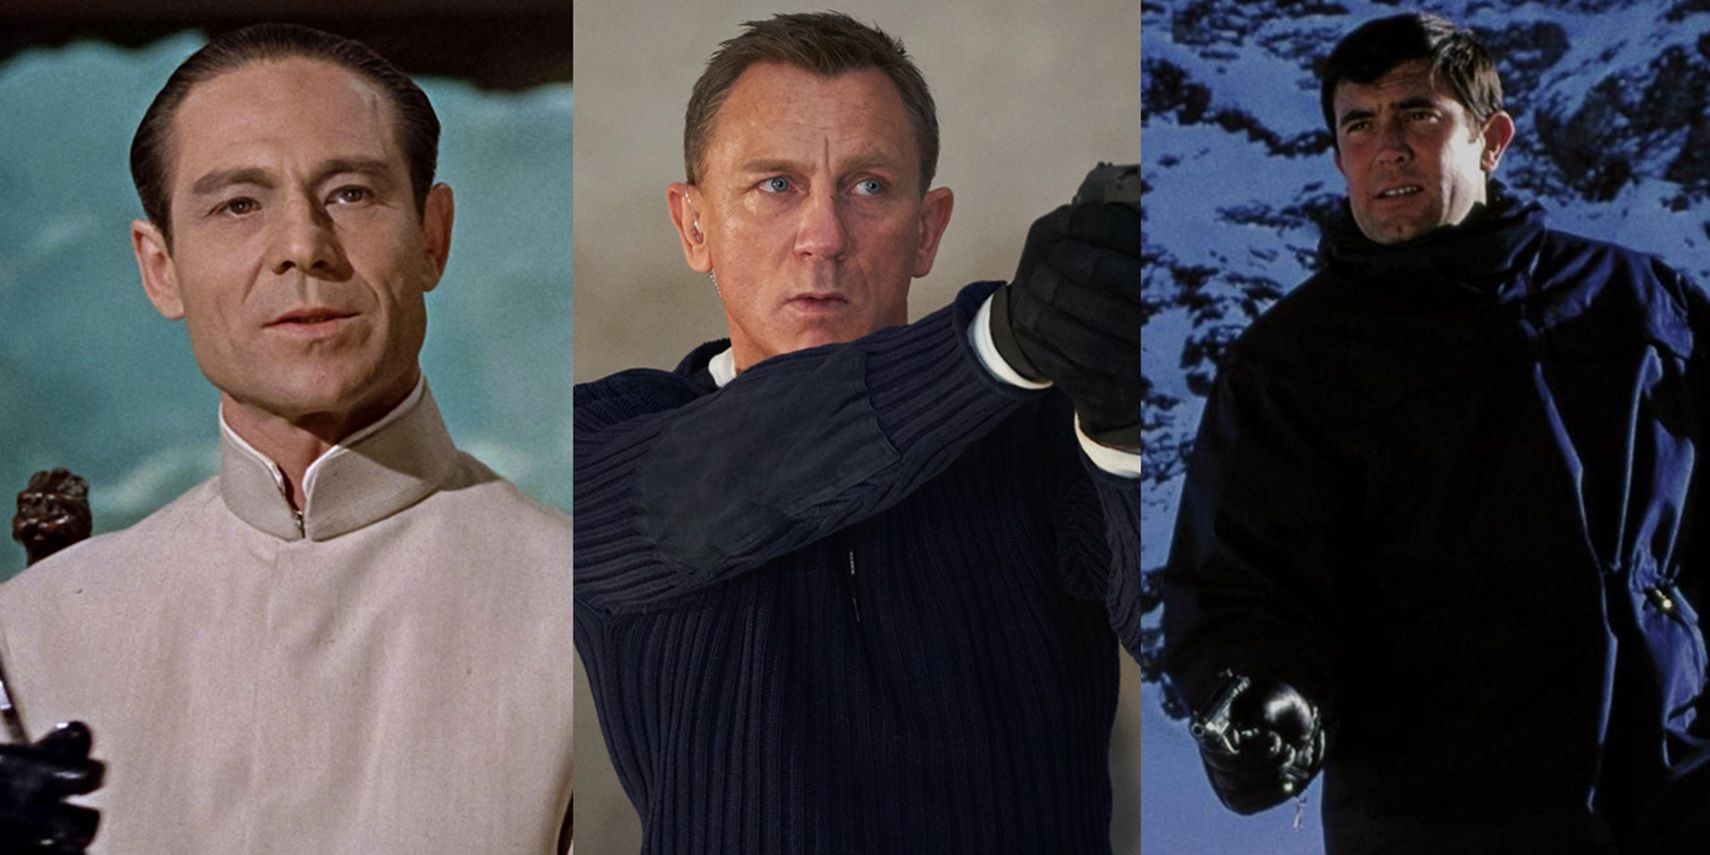 Split image of Joseph Wiseman as Dr No, Daniel Craig as Bond, and George Lazenby as Bond